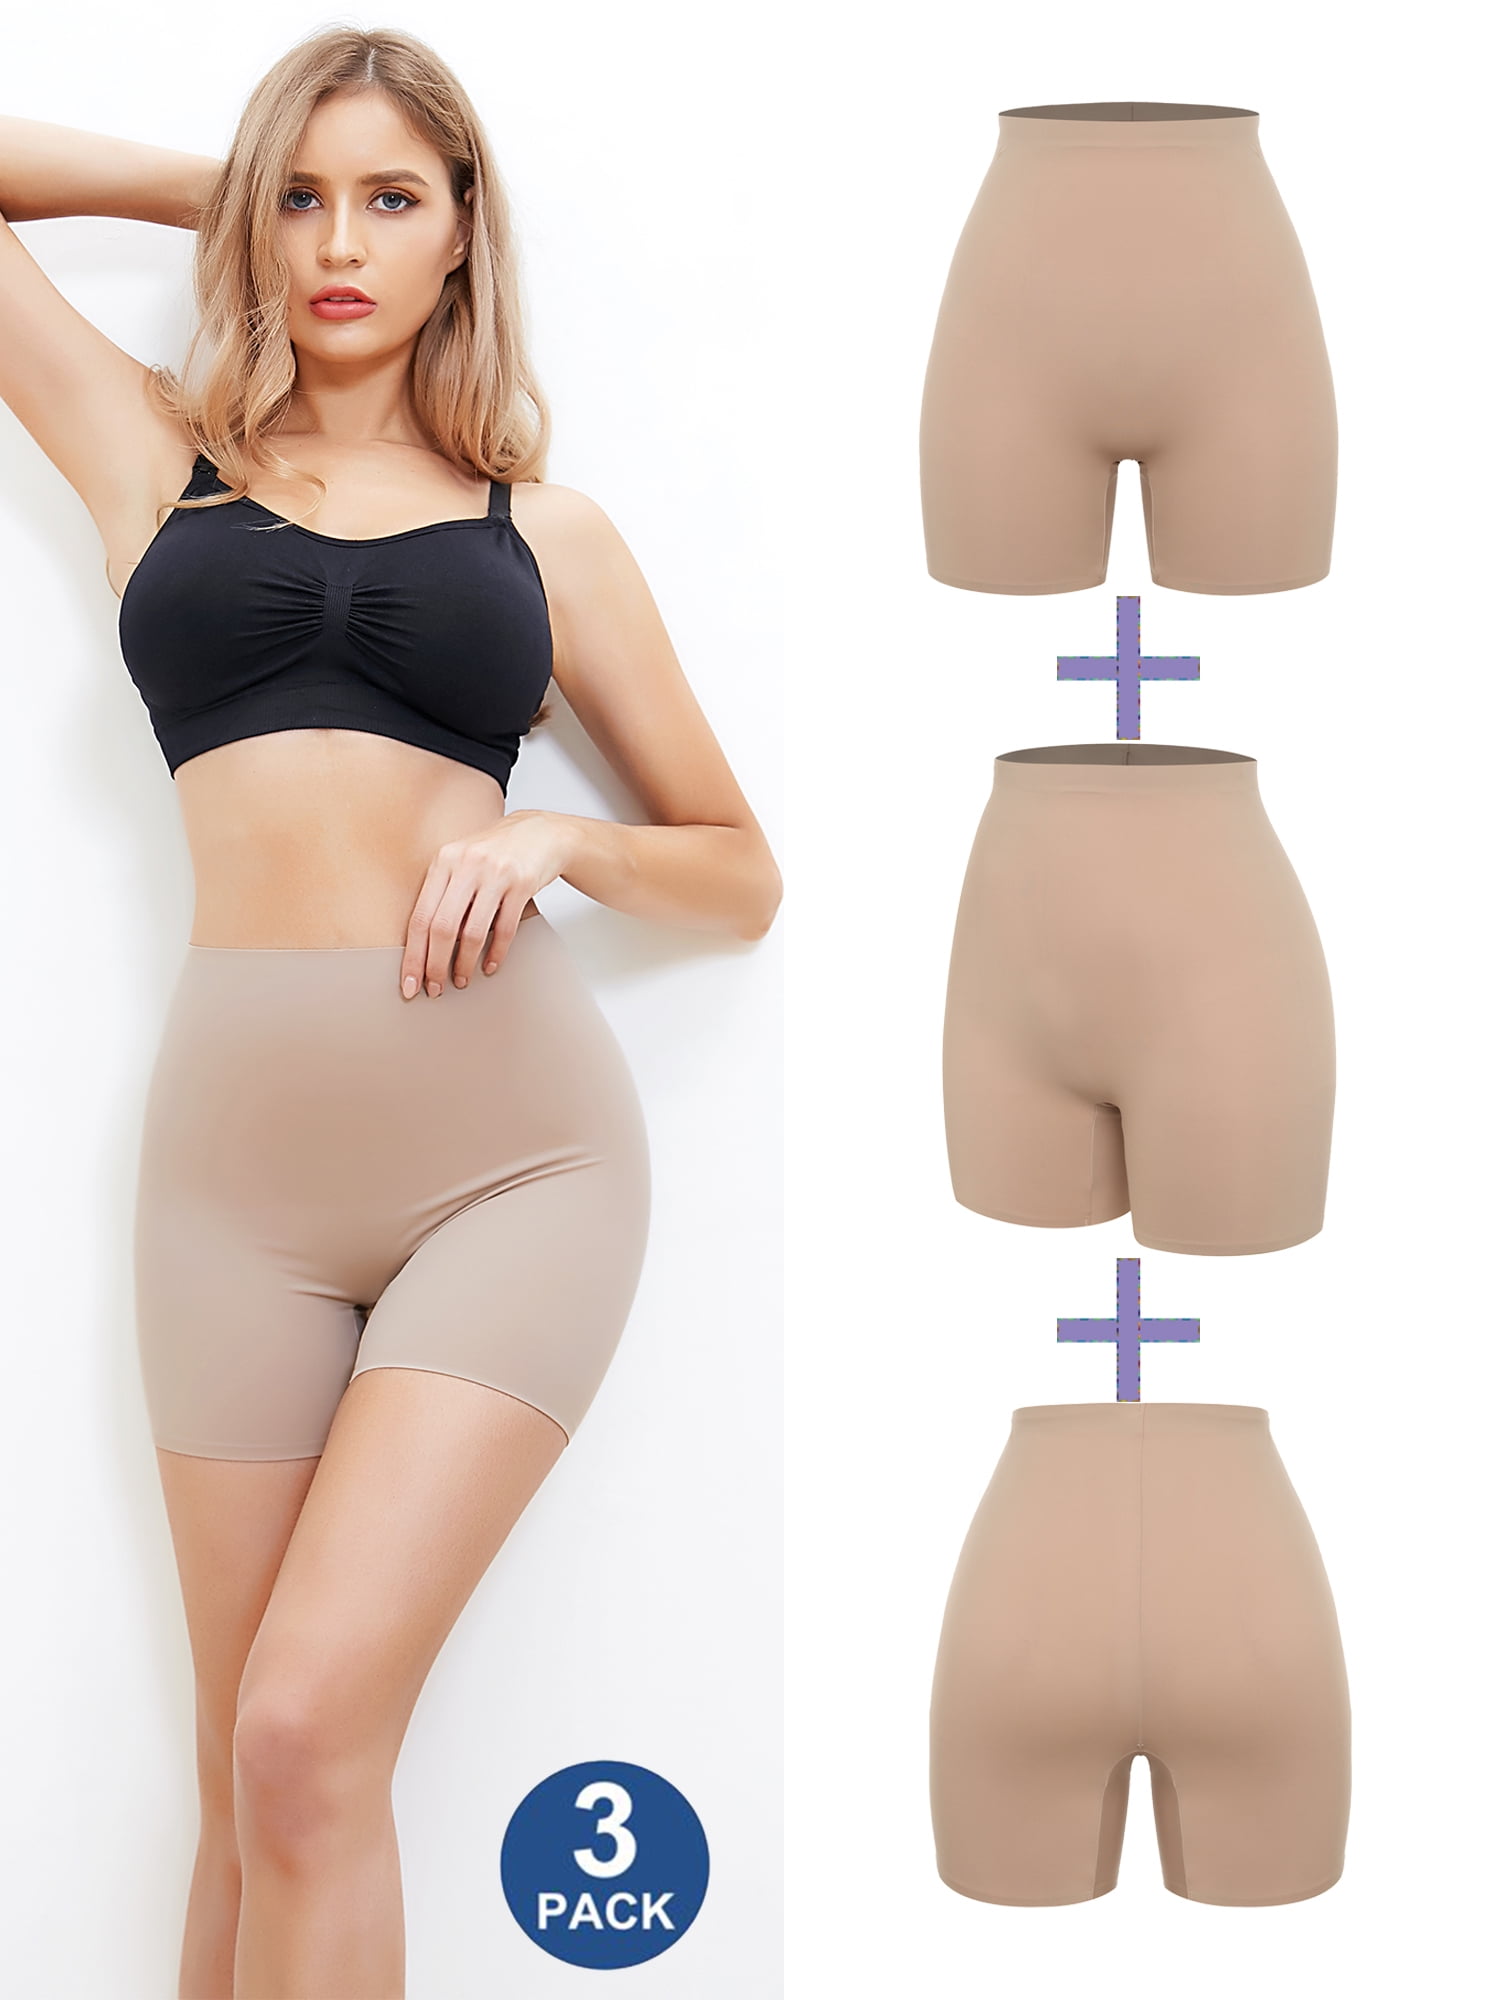 Joyshaper 3 Pack Women Seamless Slip Shorts for Under Dress Smooth